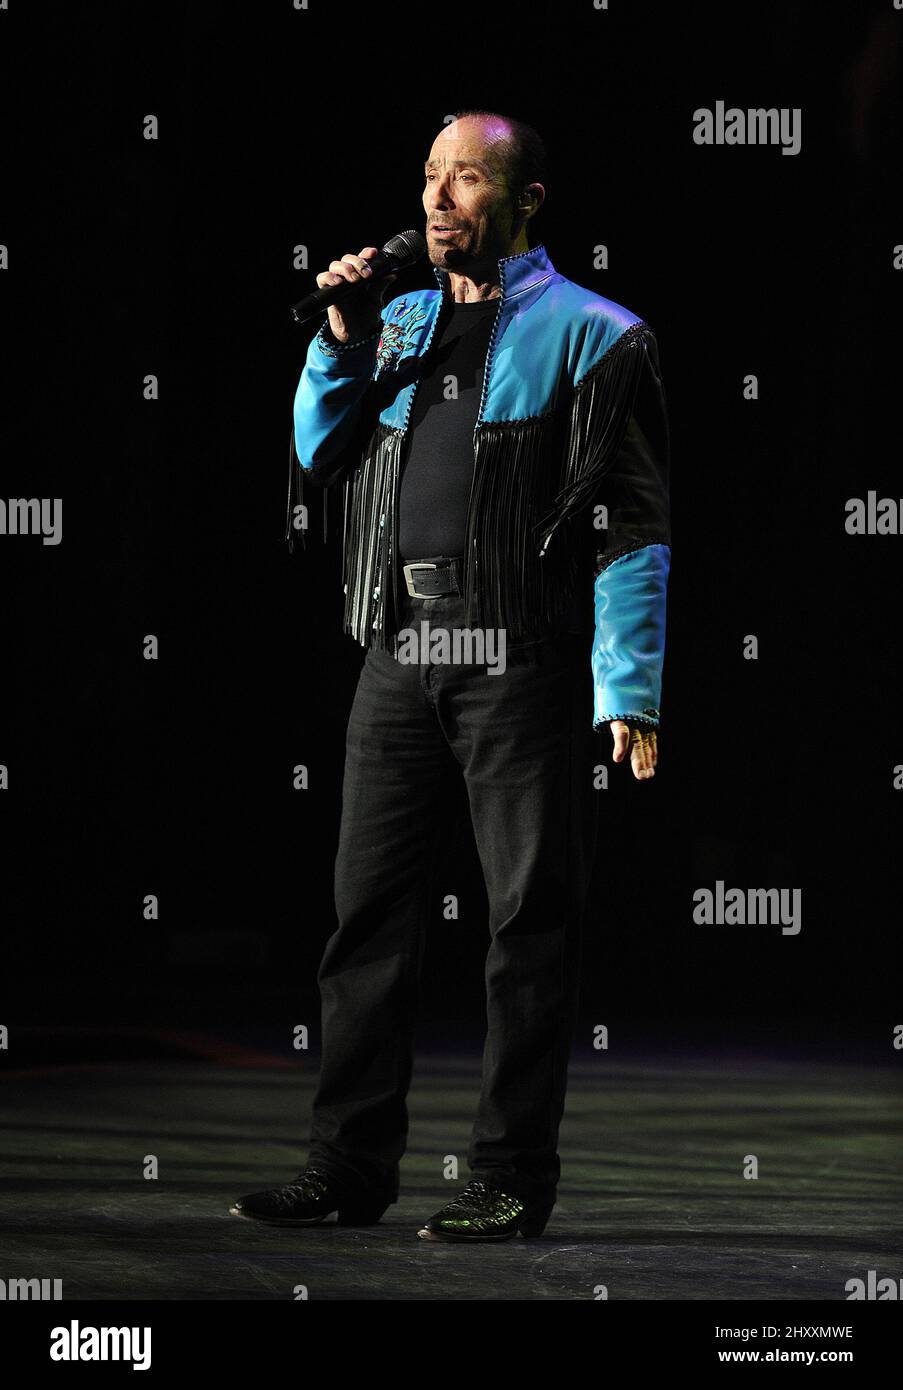 Lee Greenwood during their 2012 tour at the Alabama Theater, South Carolina Stock Photo